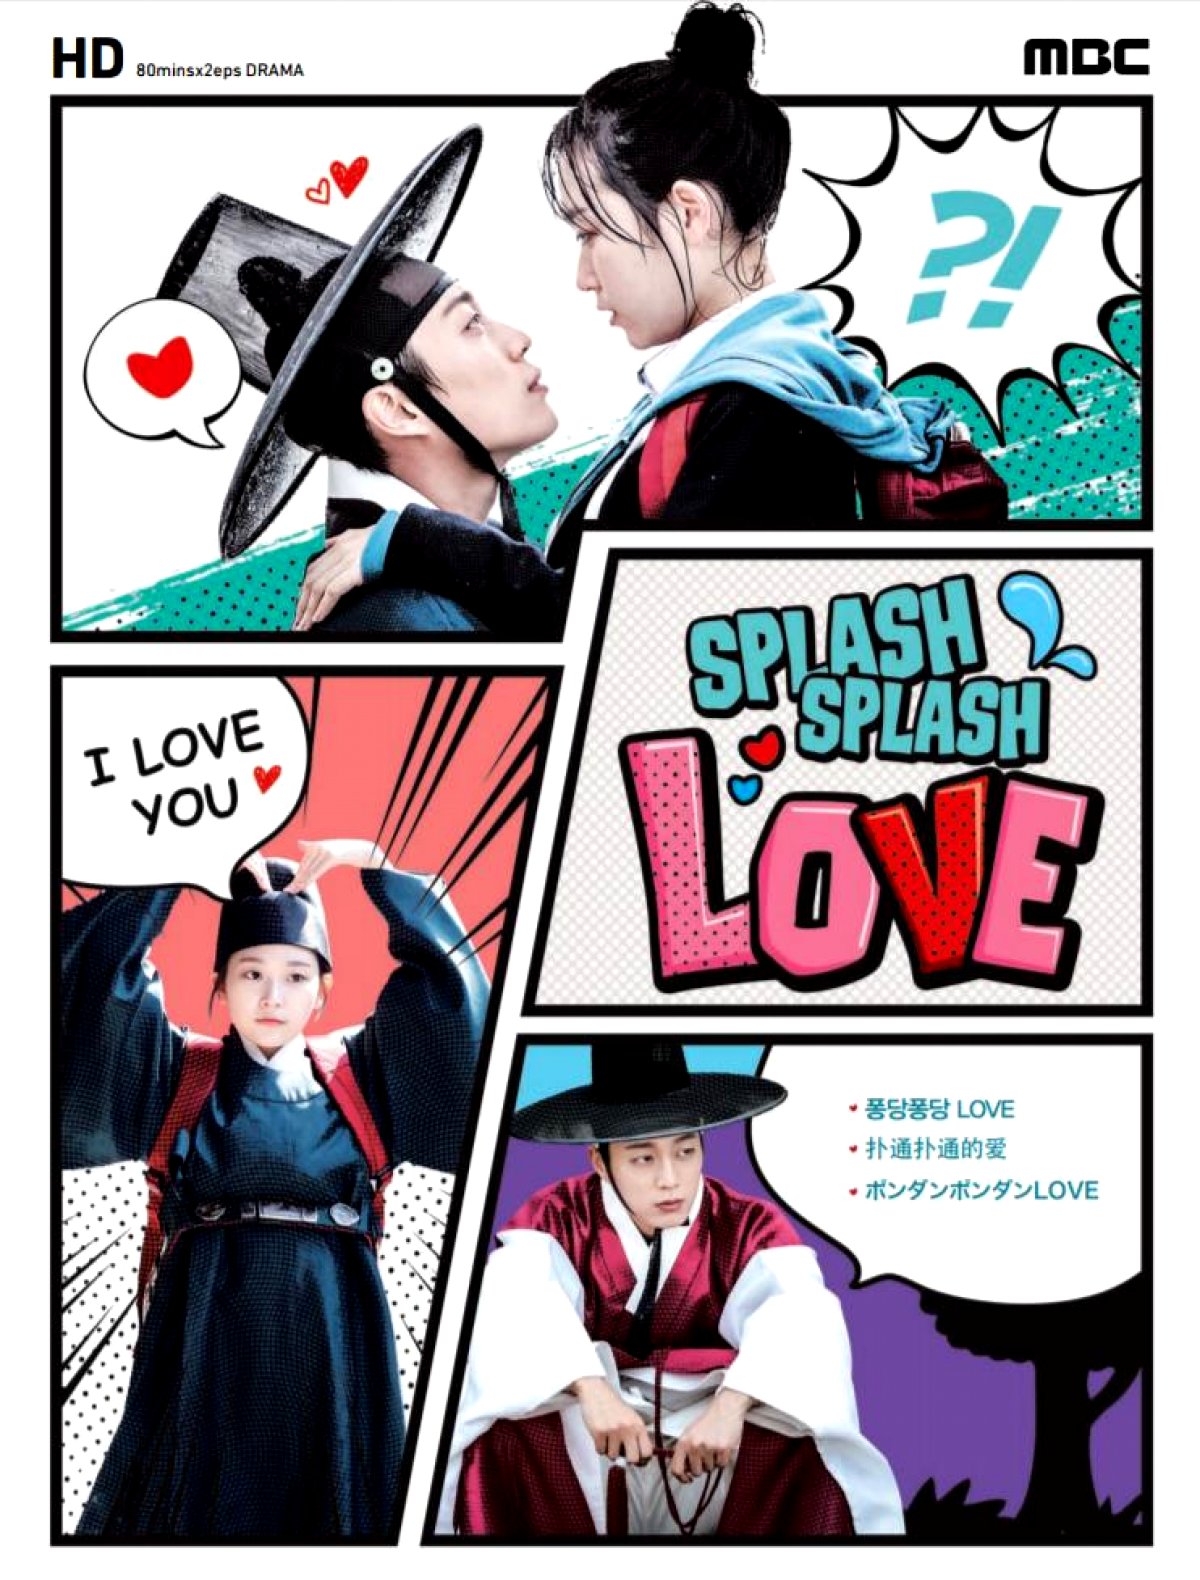 مینی سریال کره ای شالاپ شلوپ عشق 2015 Splash Splash Love